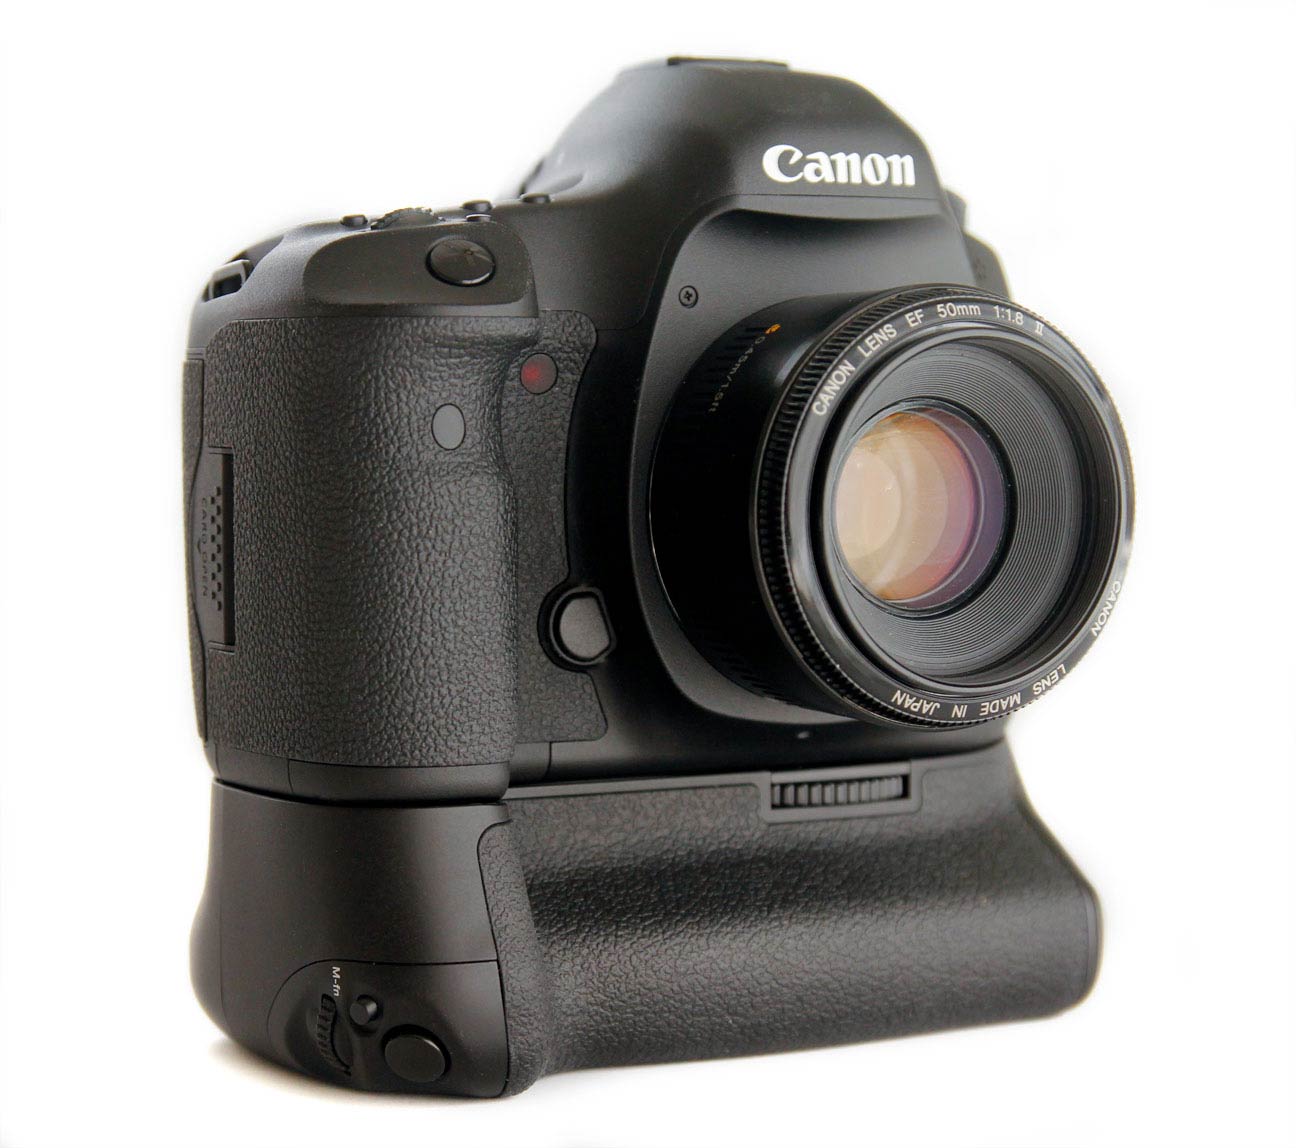 berømmelse Accord Brug af en computer Review: Pixel Vertax E-11 Battery Grip for Canon 5D Mark III - Light And  Matter